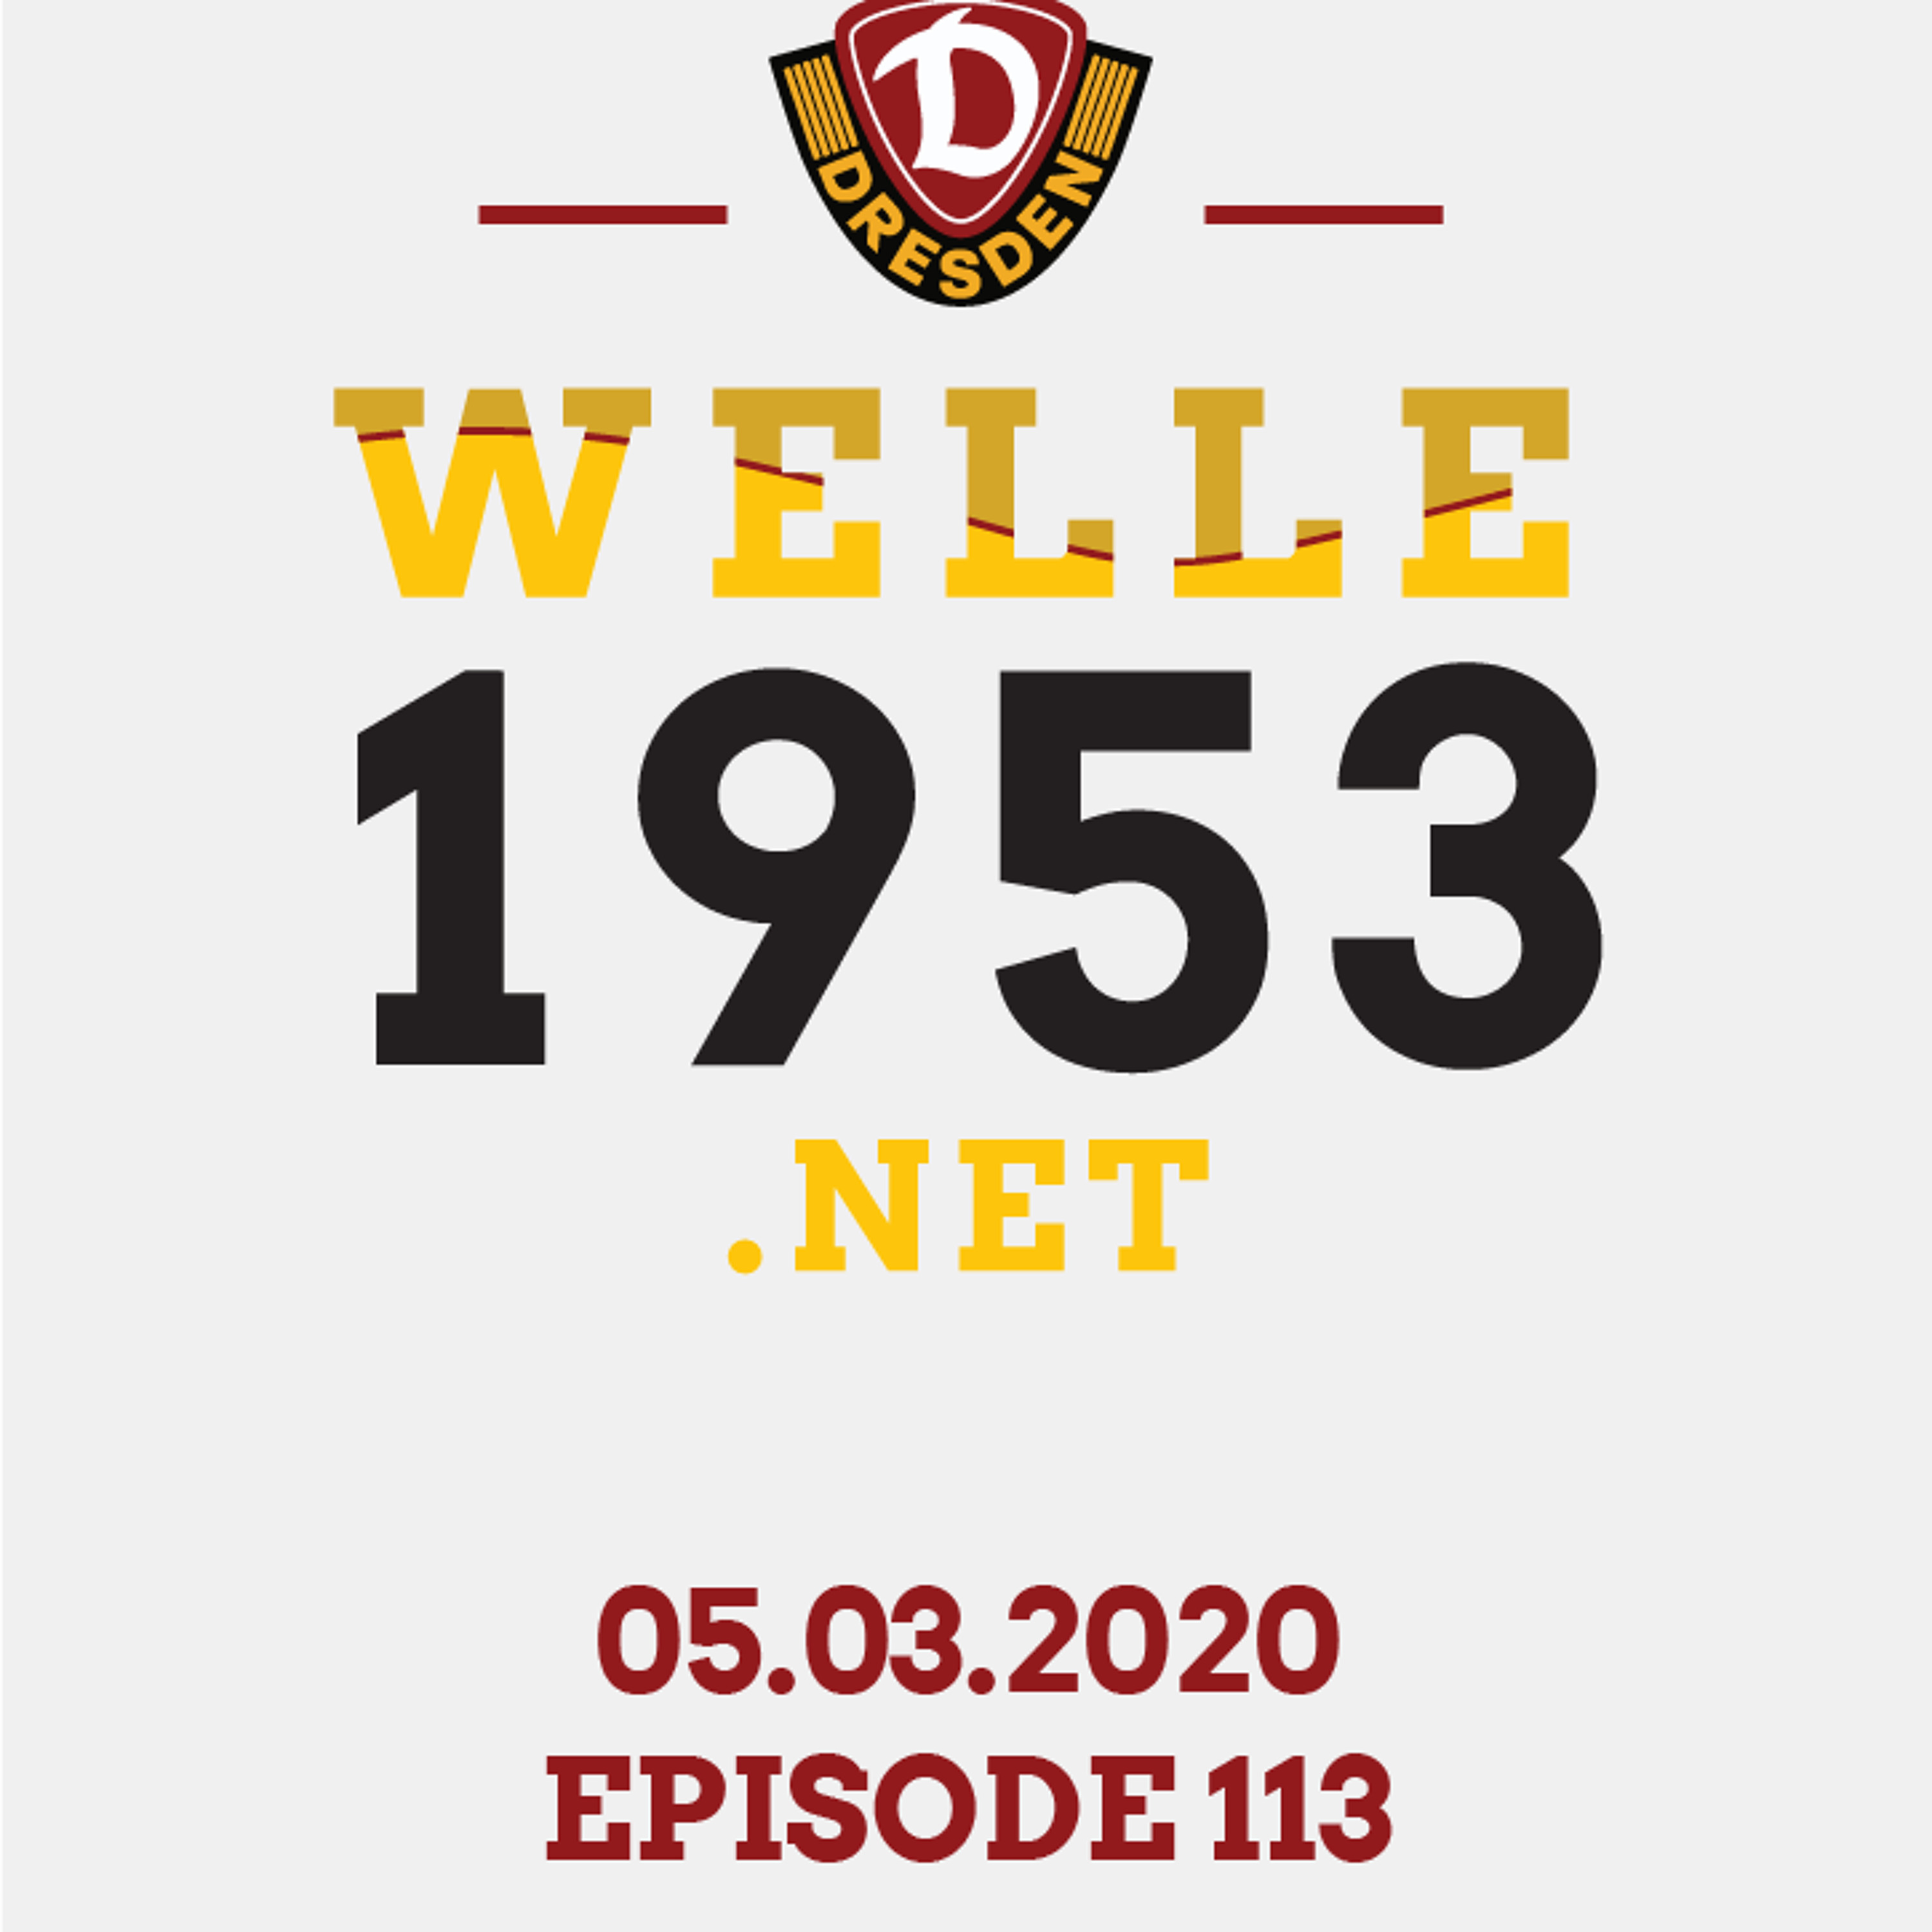 welle1953 Episode 113 - 05.03.2020